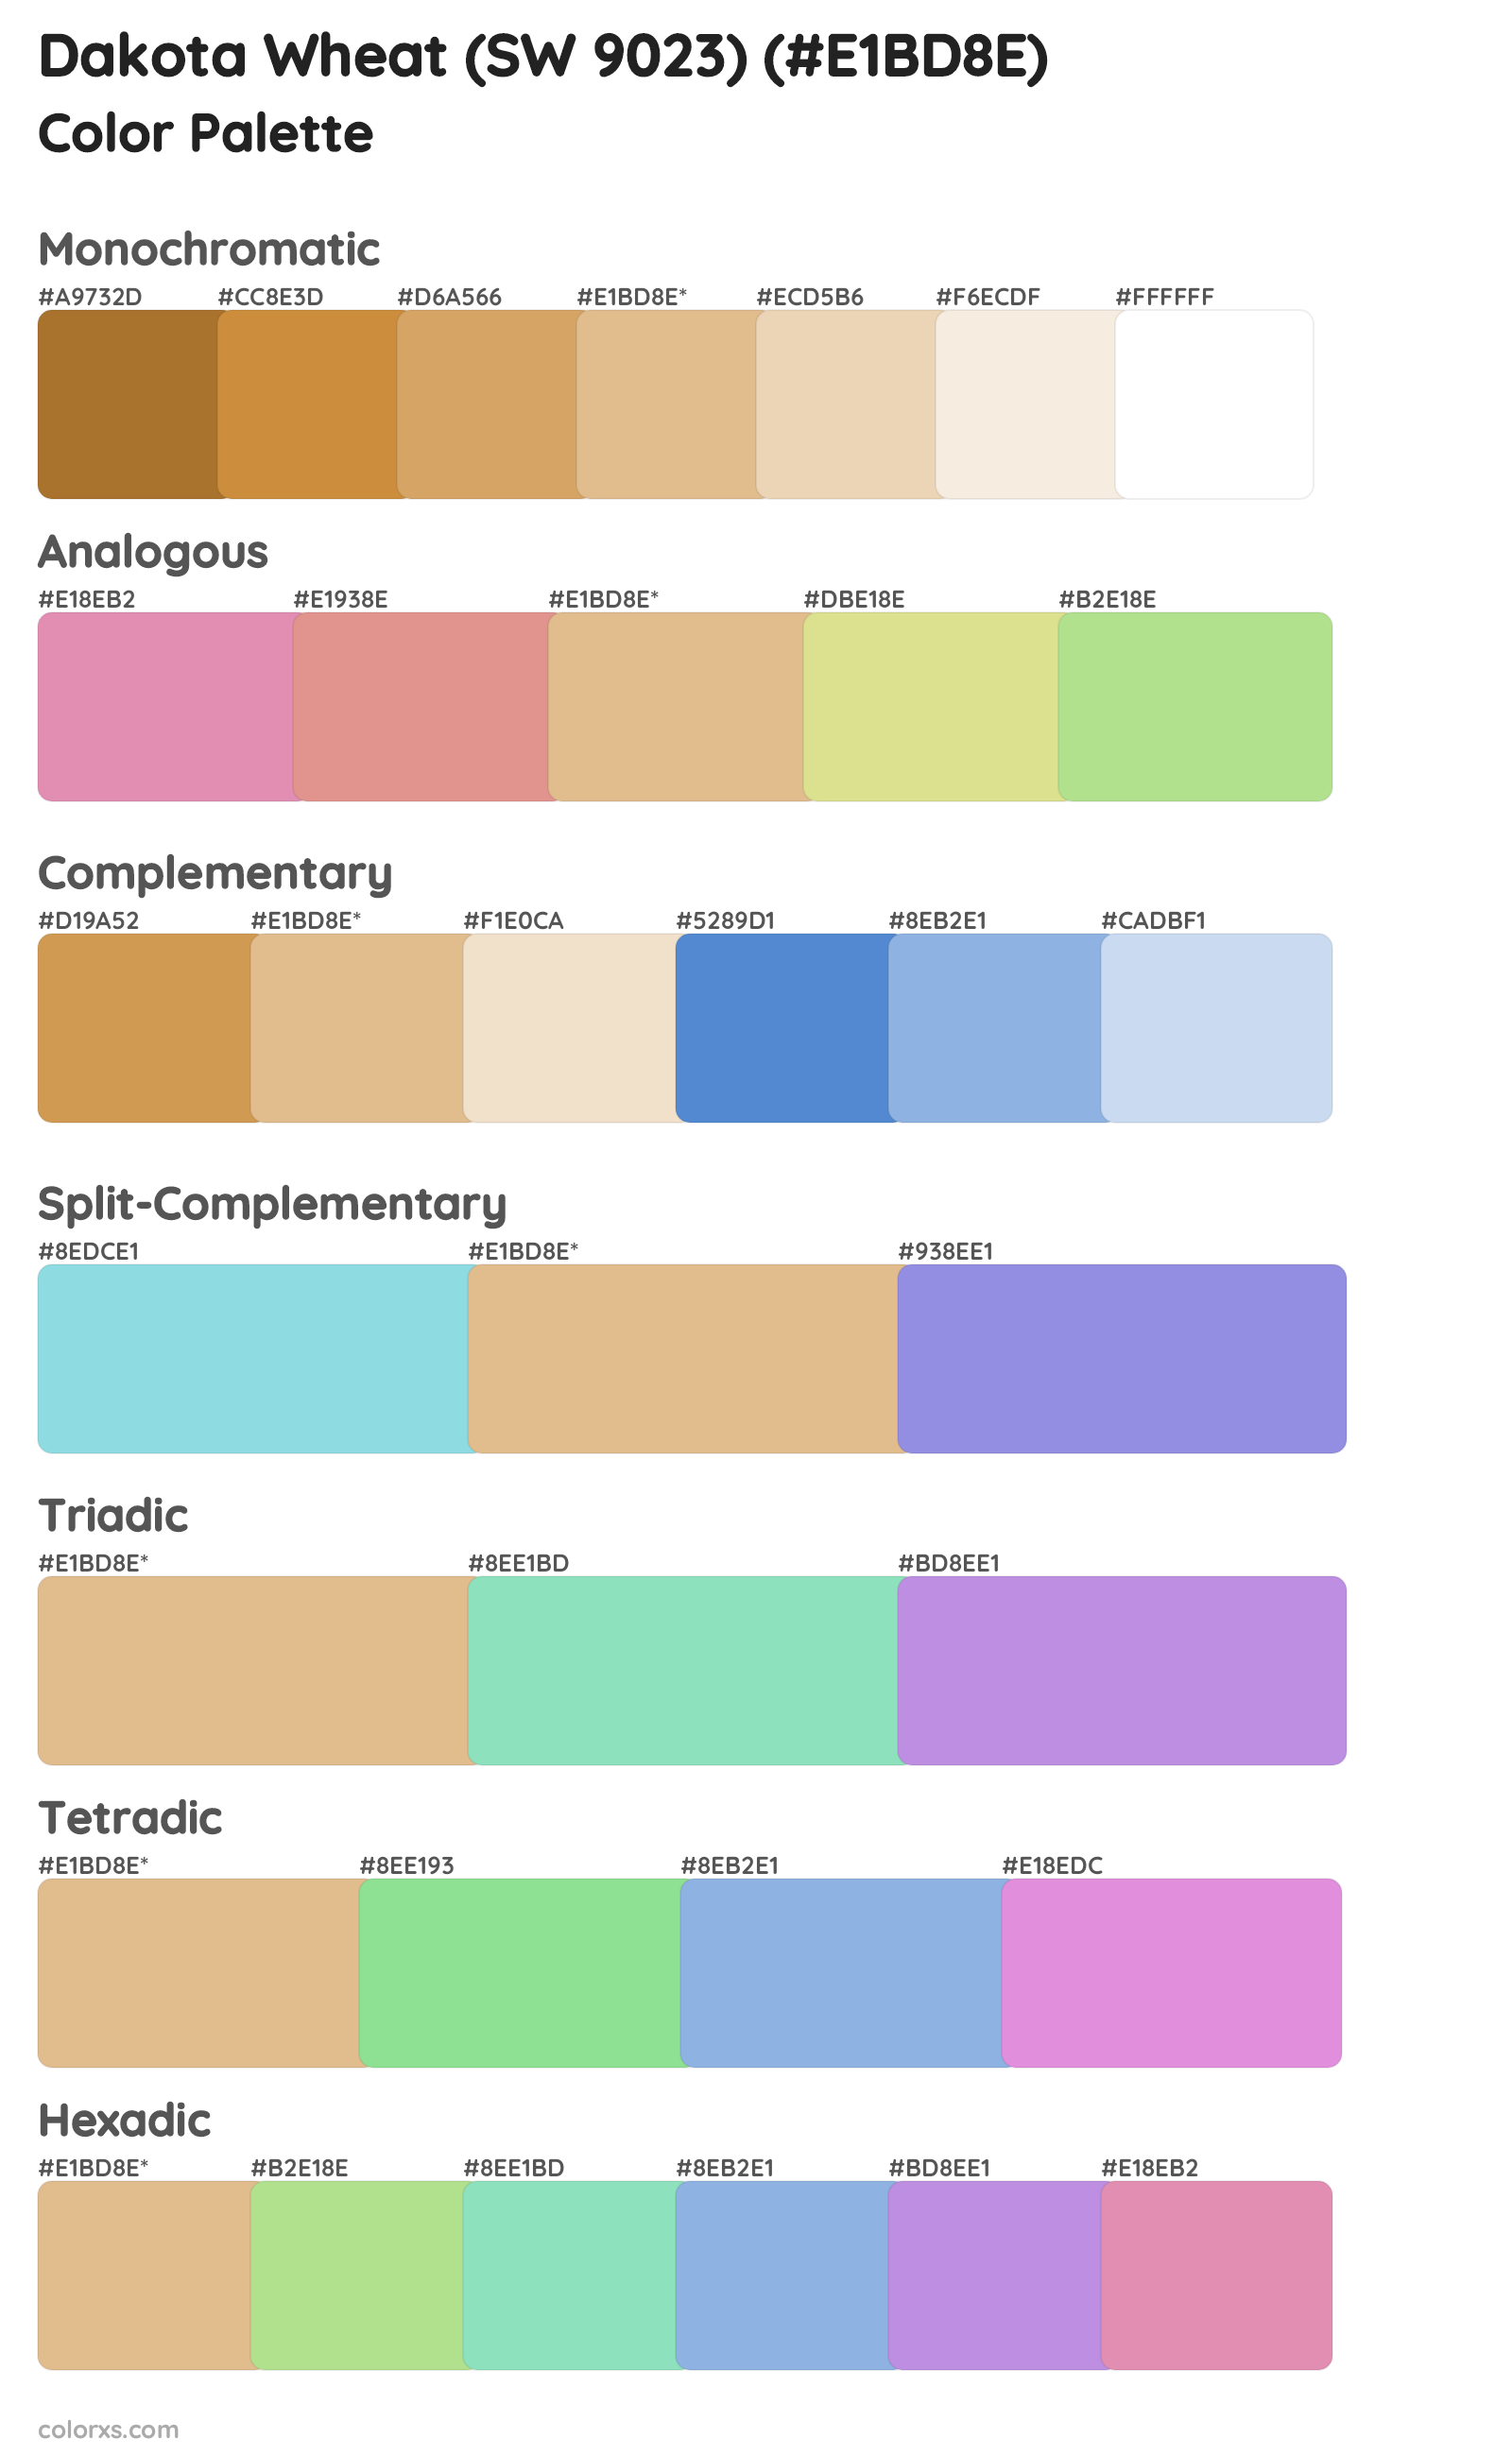 Dakota Wheat (SW 9023) Color Scheme Palettes